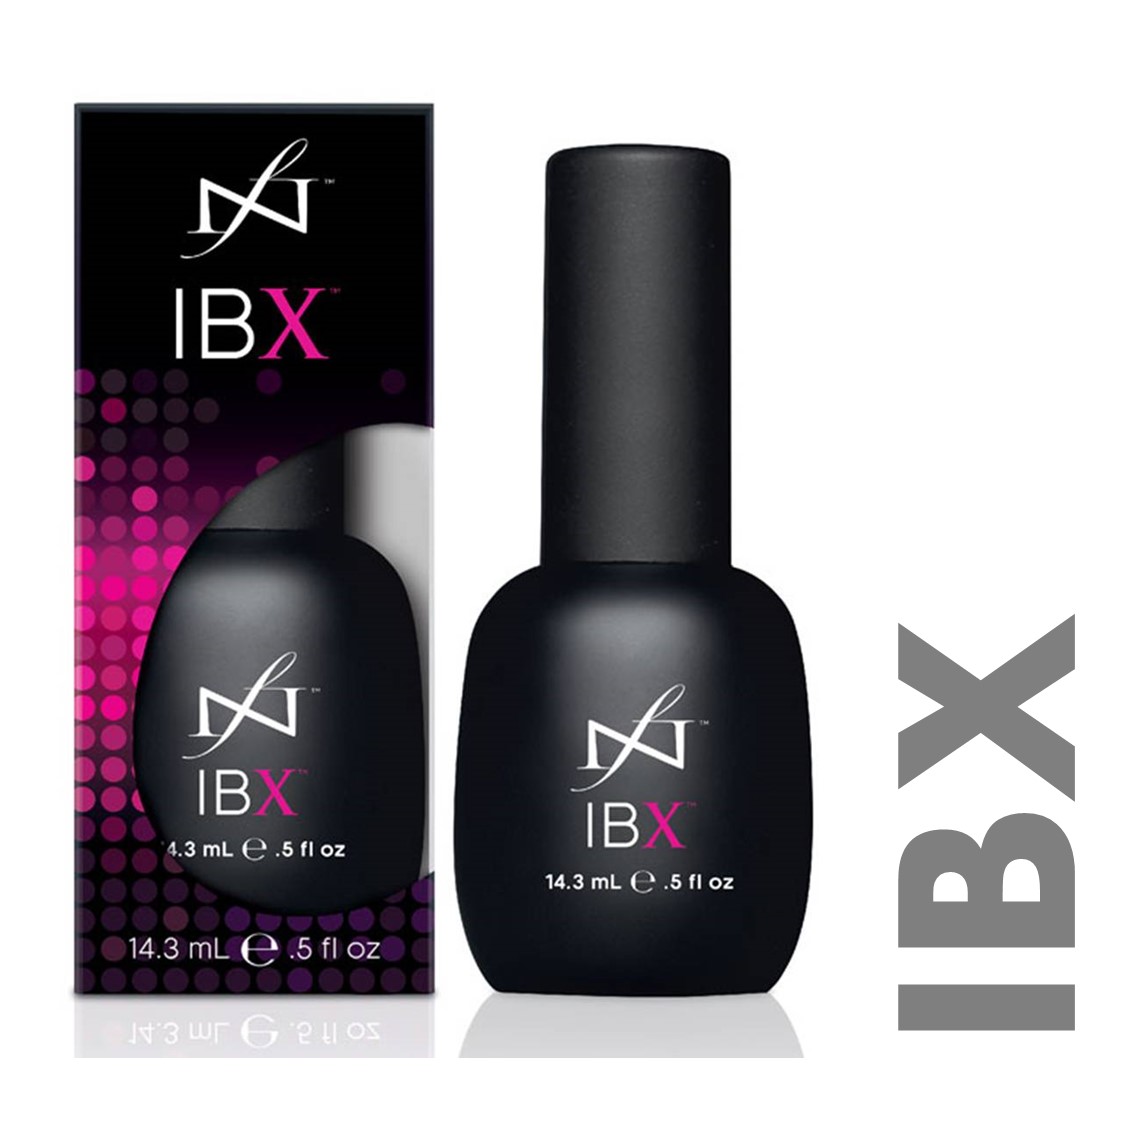 ibx-website-banner-vierkant